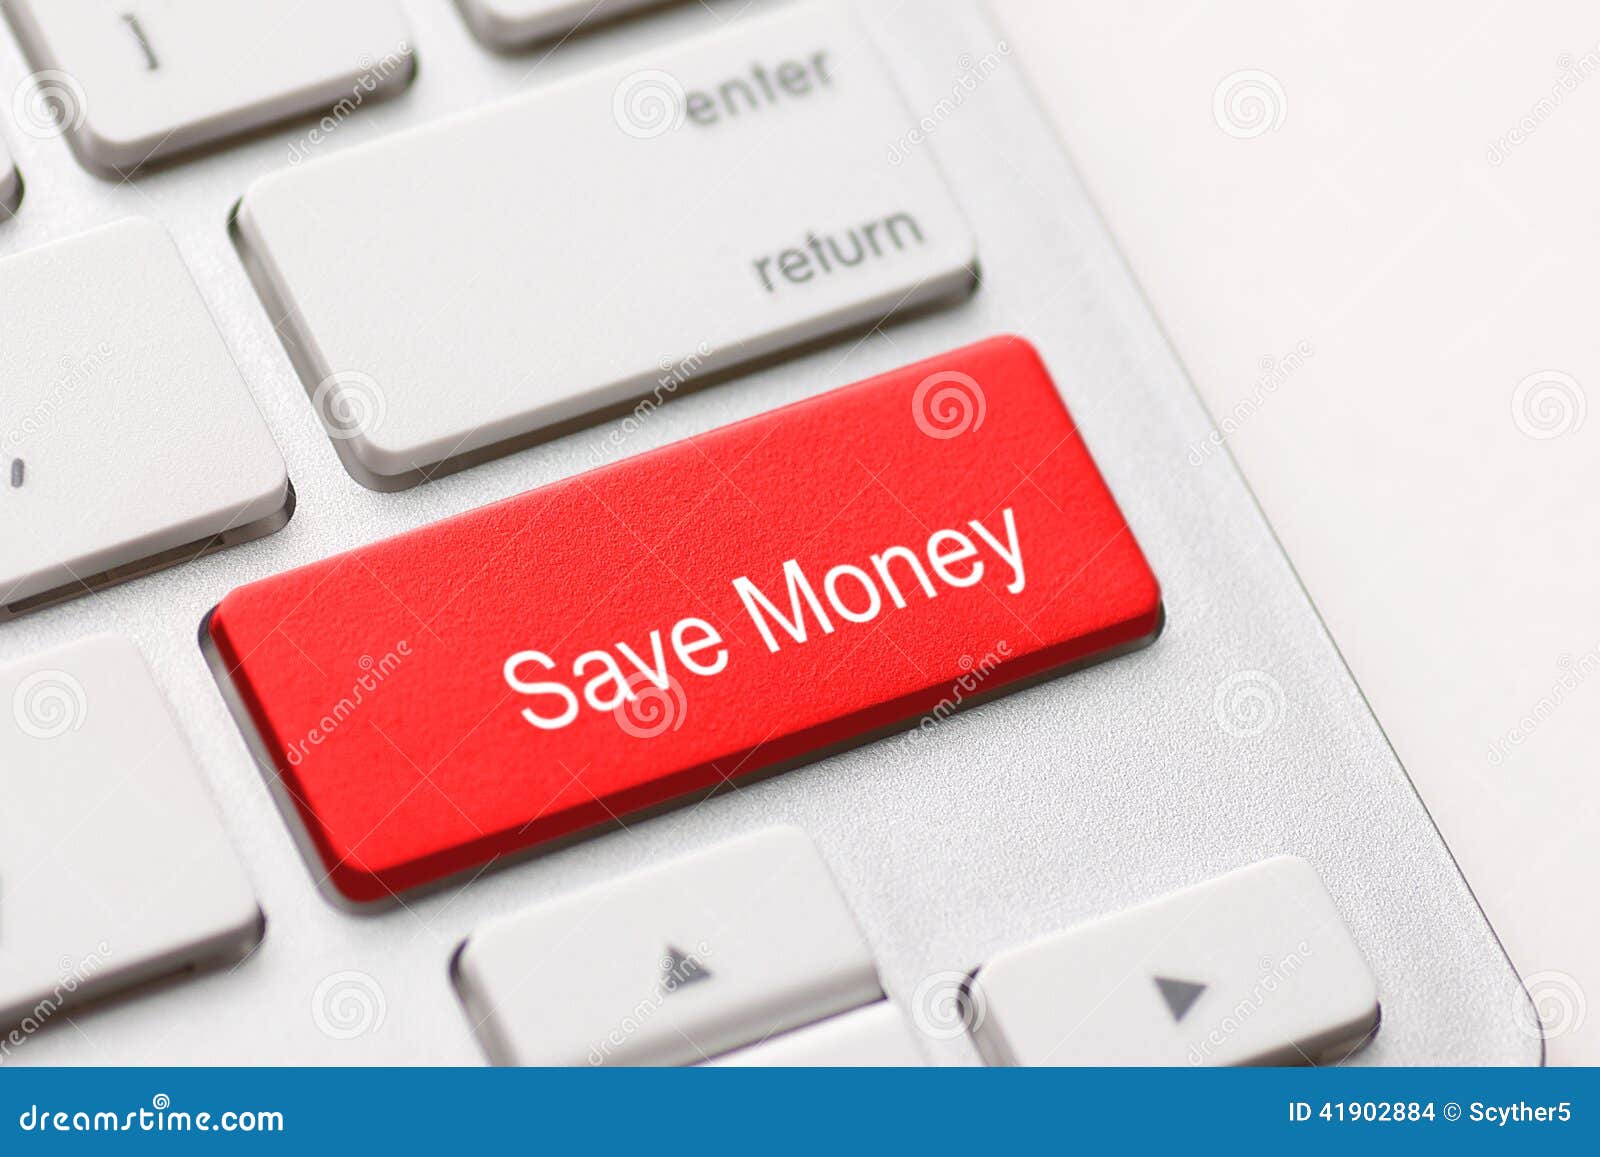 save money button key